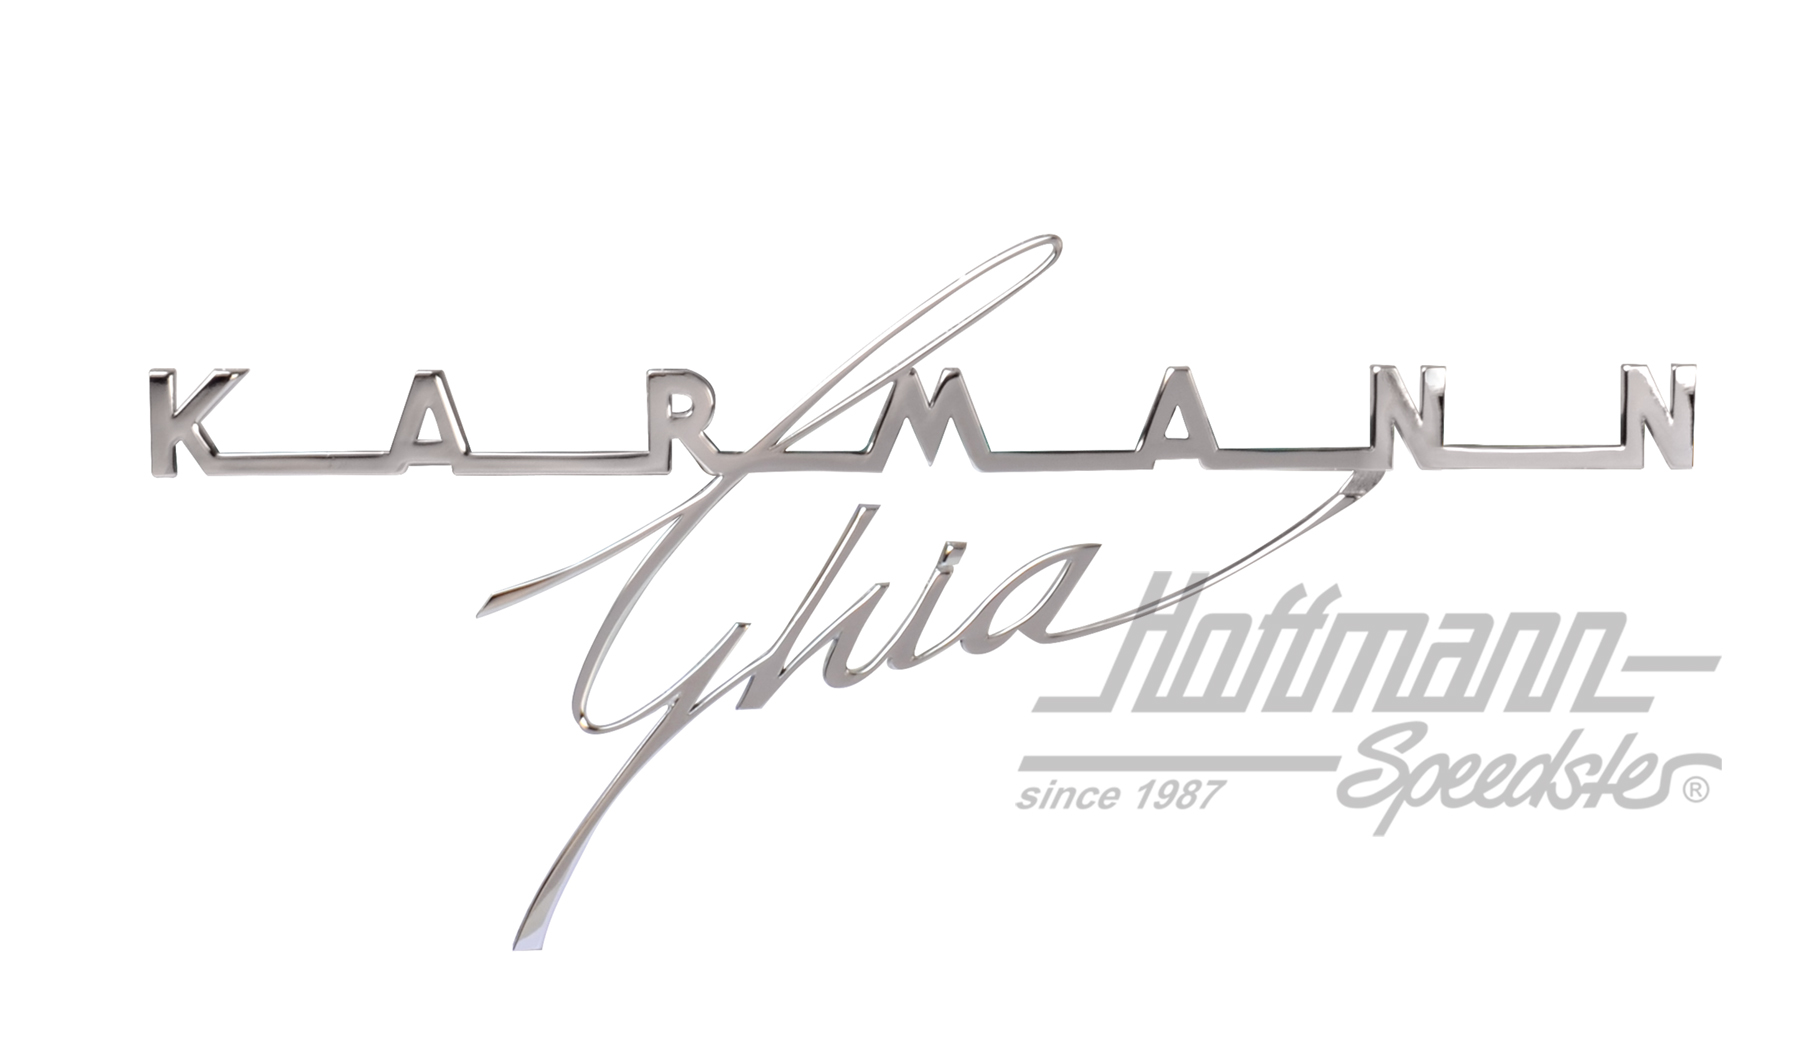 Schriftzug "Karmann Ghia", 8.62-7.74